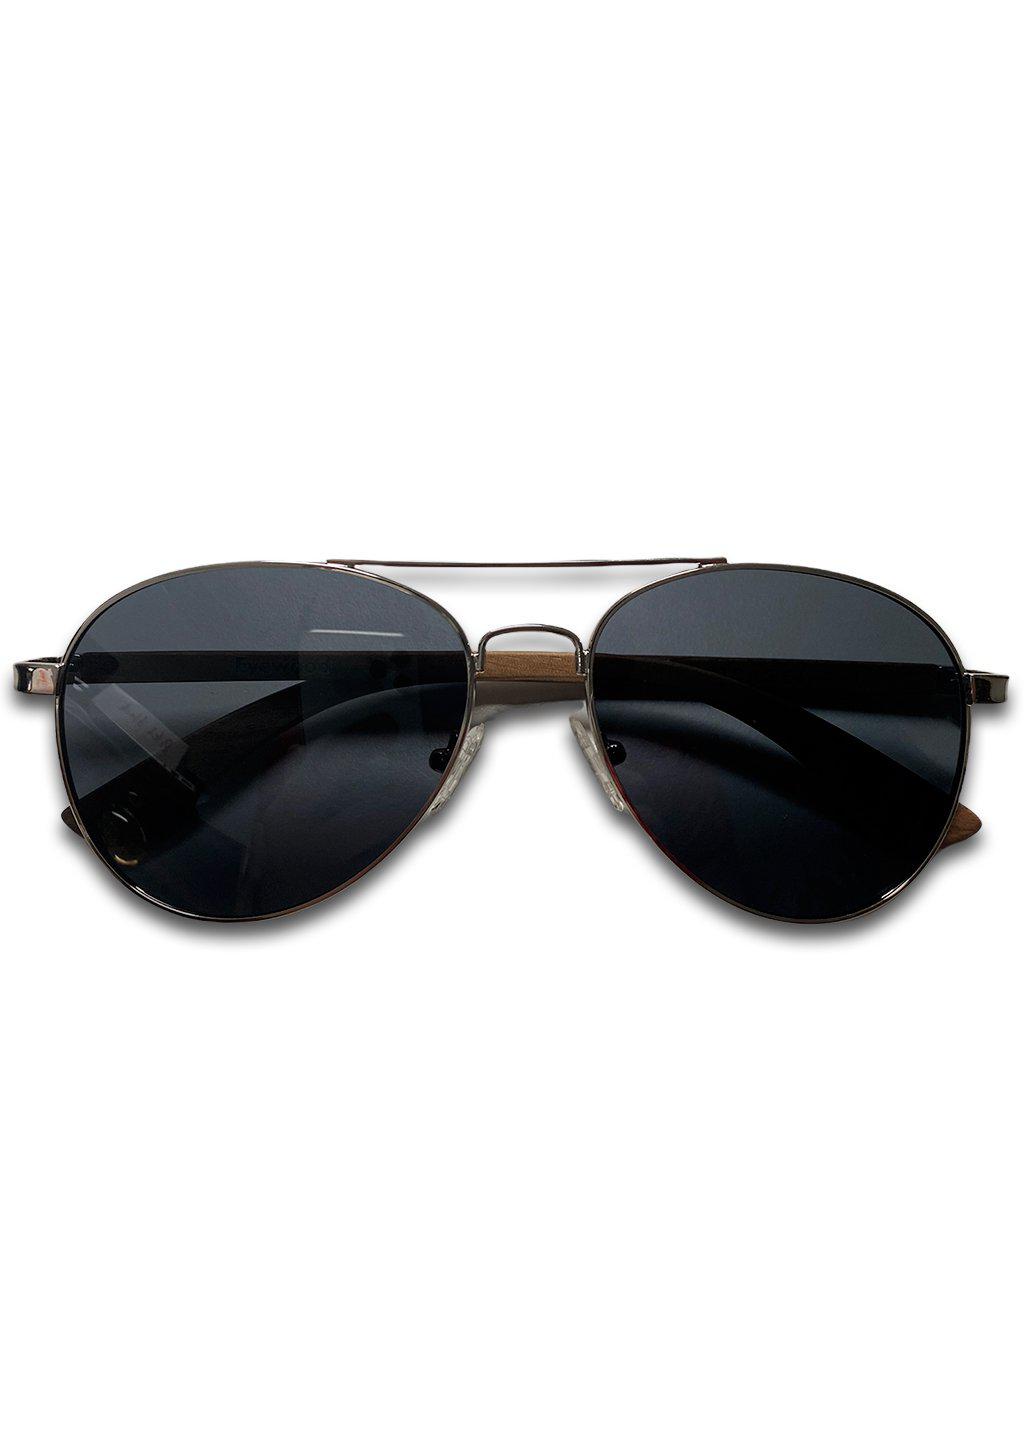 Eyewood Aviators - Falcon - Wooden sunglasses